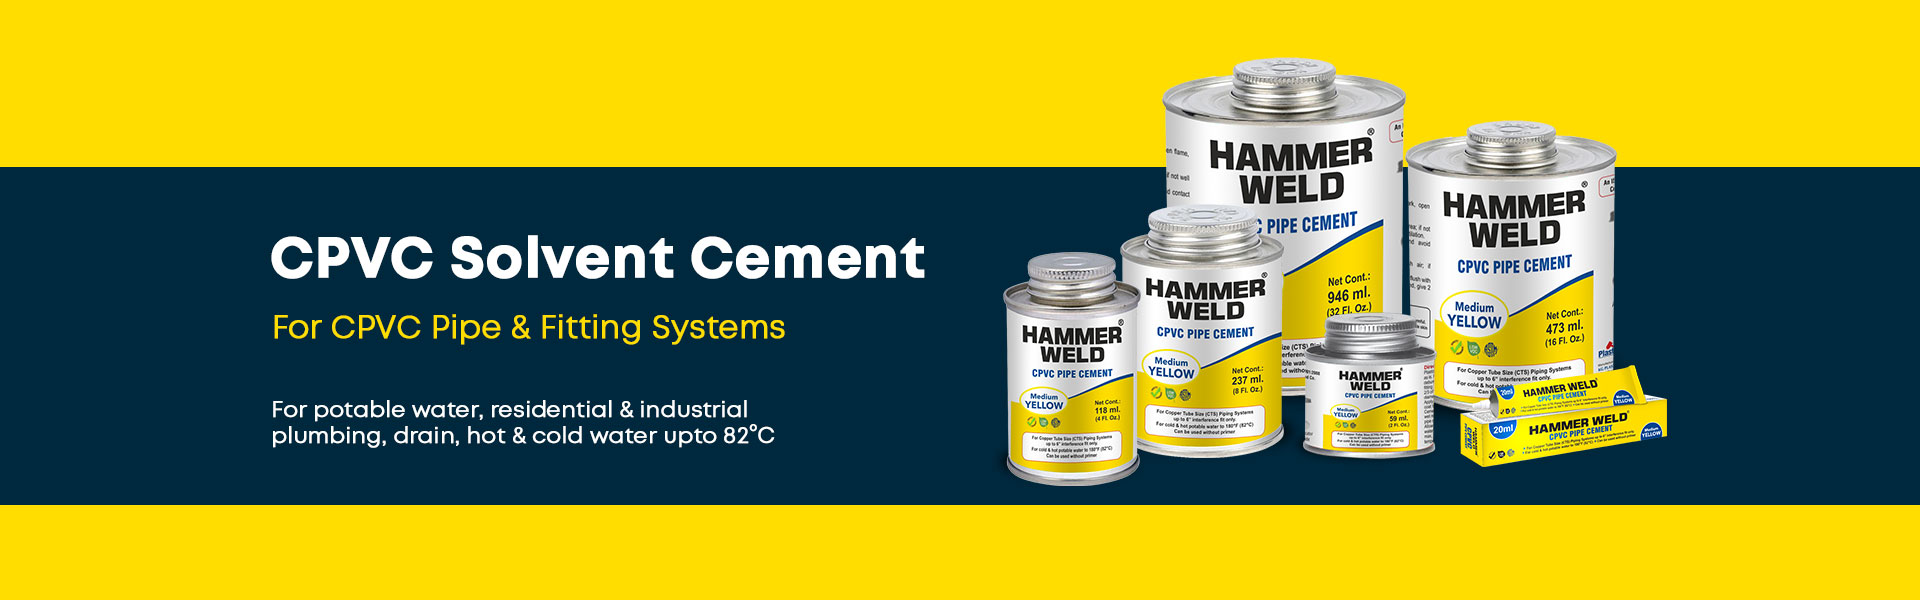 HammerWeld cpvc solvent cement